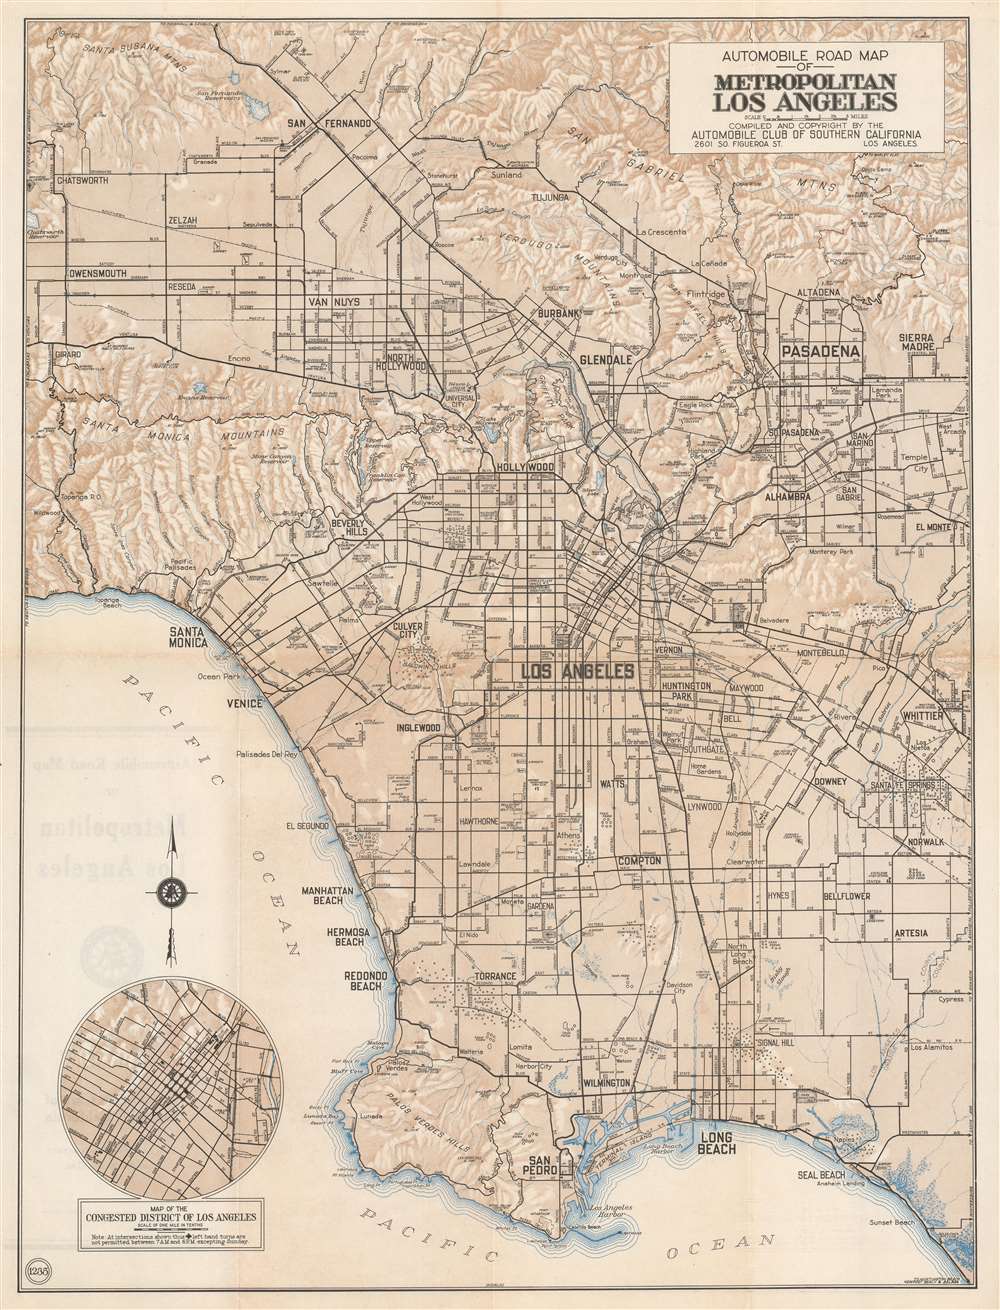 Automobile Road Map of Metropolitan Los Angeles. - Main View